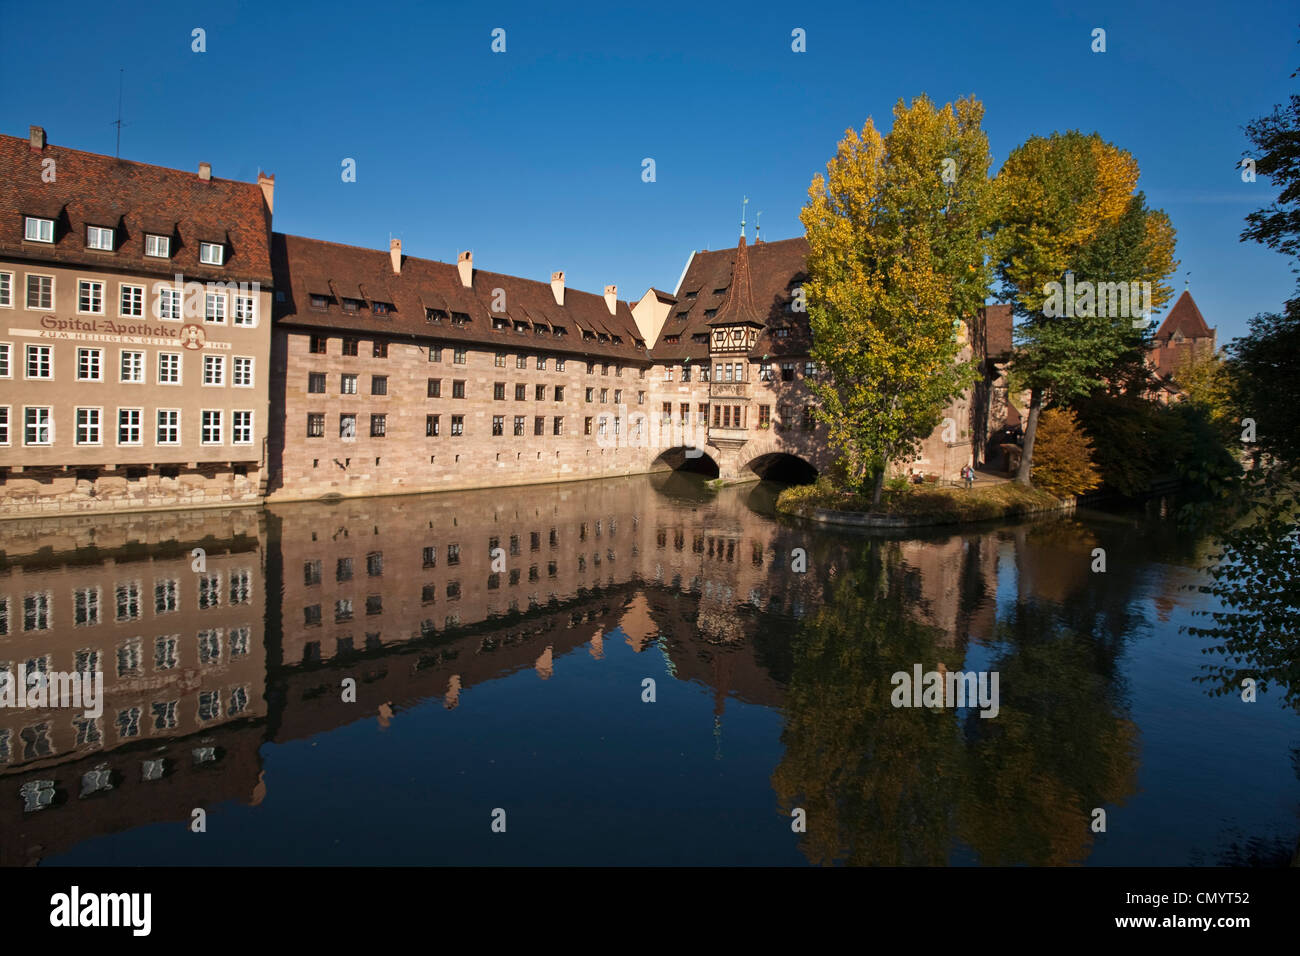 Old City Center of Nuernberg, Heilig Geist Spital, river Pregnitz, Nuernberg, Germany Stock Photo